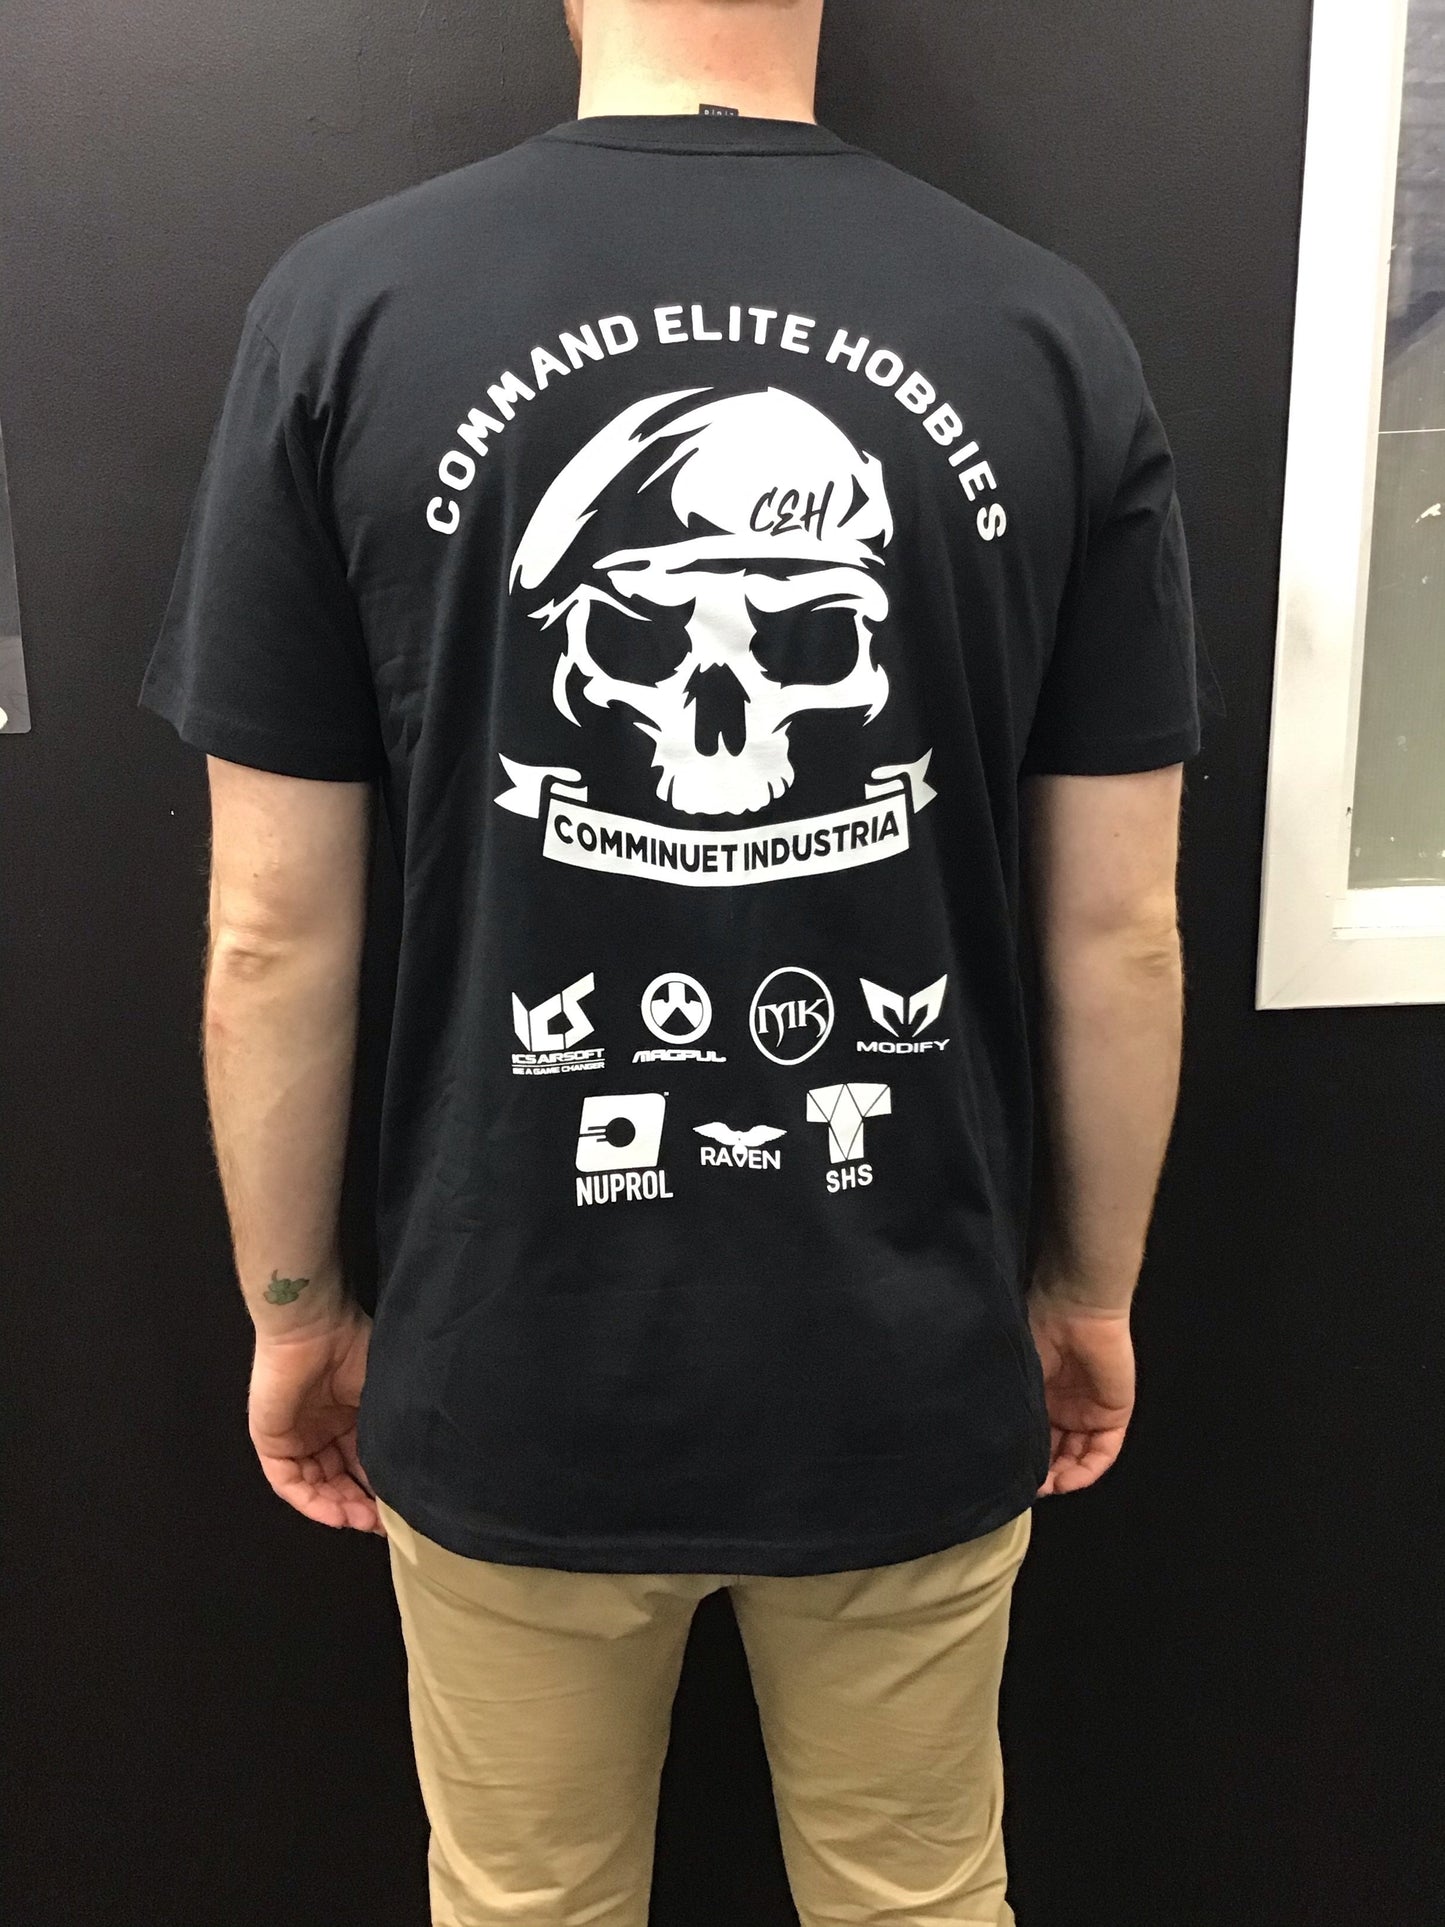 
                  
                    Command Elite Hobbies Logo T-Shirt - Command Elite Hobbies
                  
                